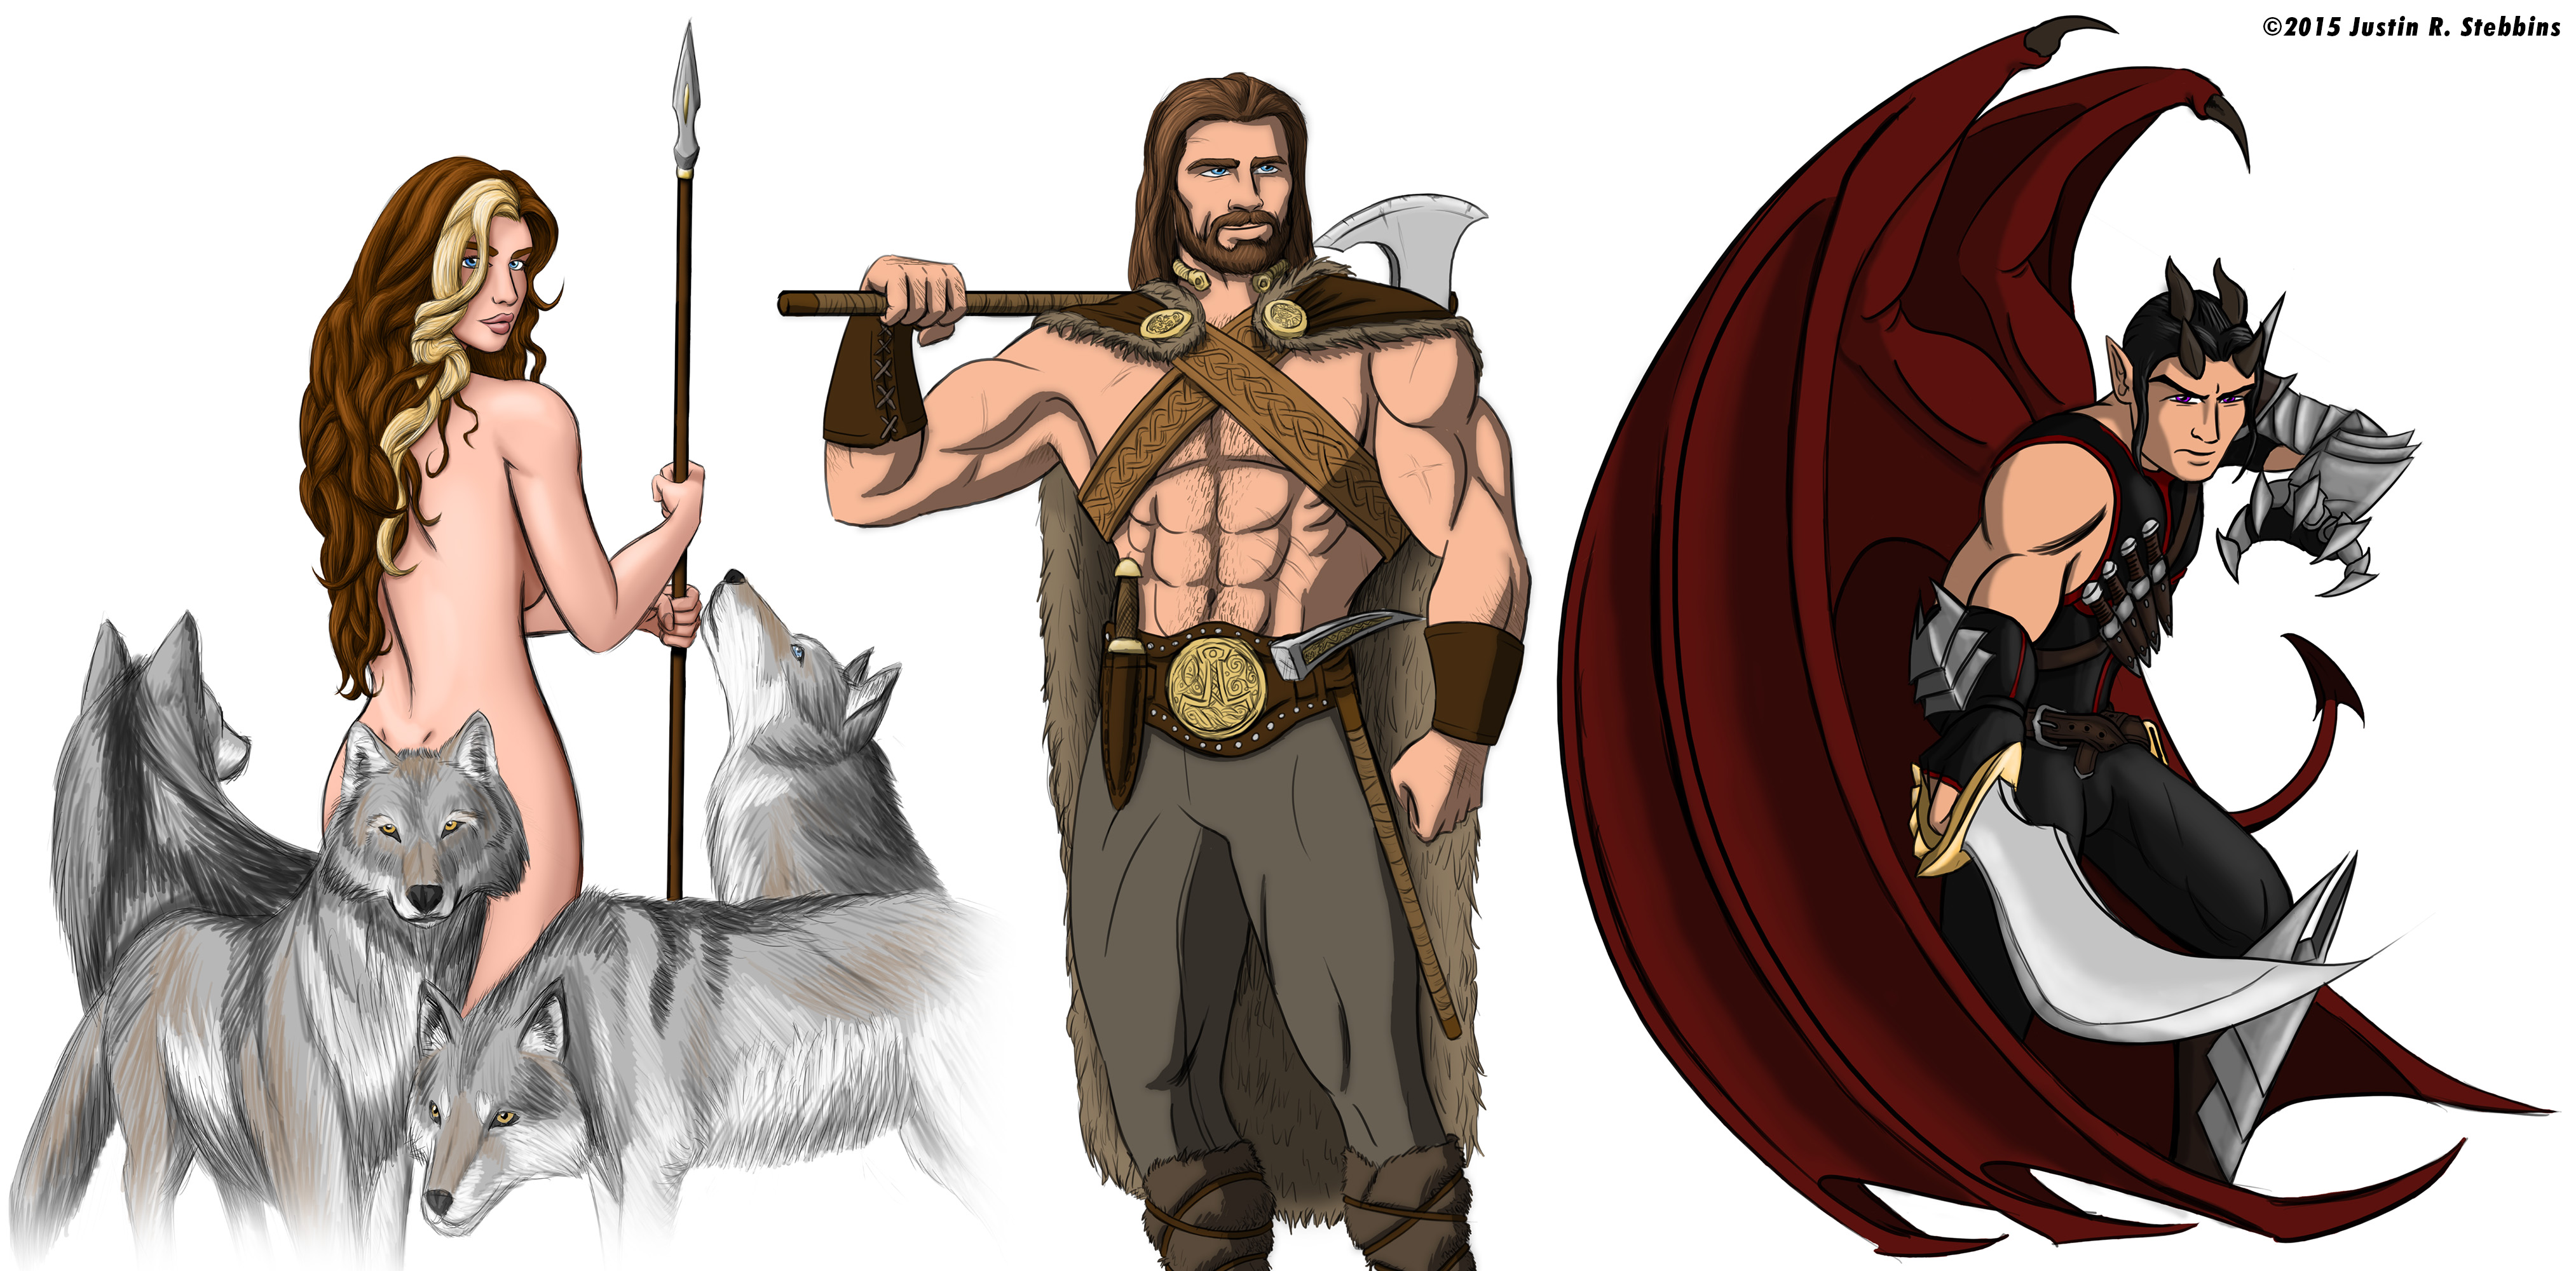 Character Illustrations for Wulfgard, Digital (Photoshop)